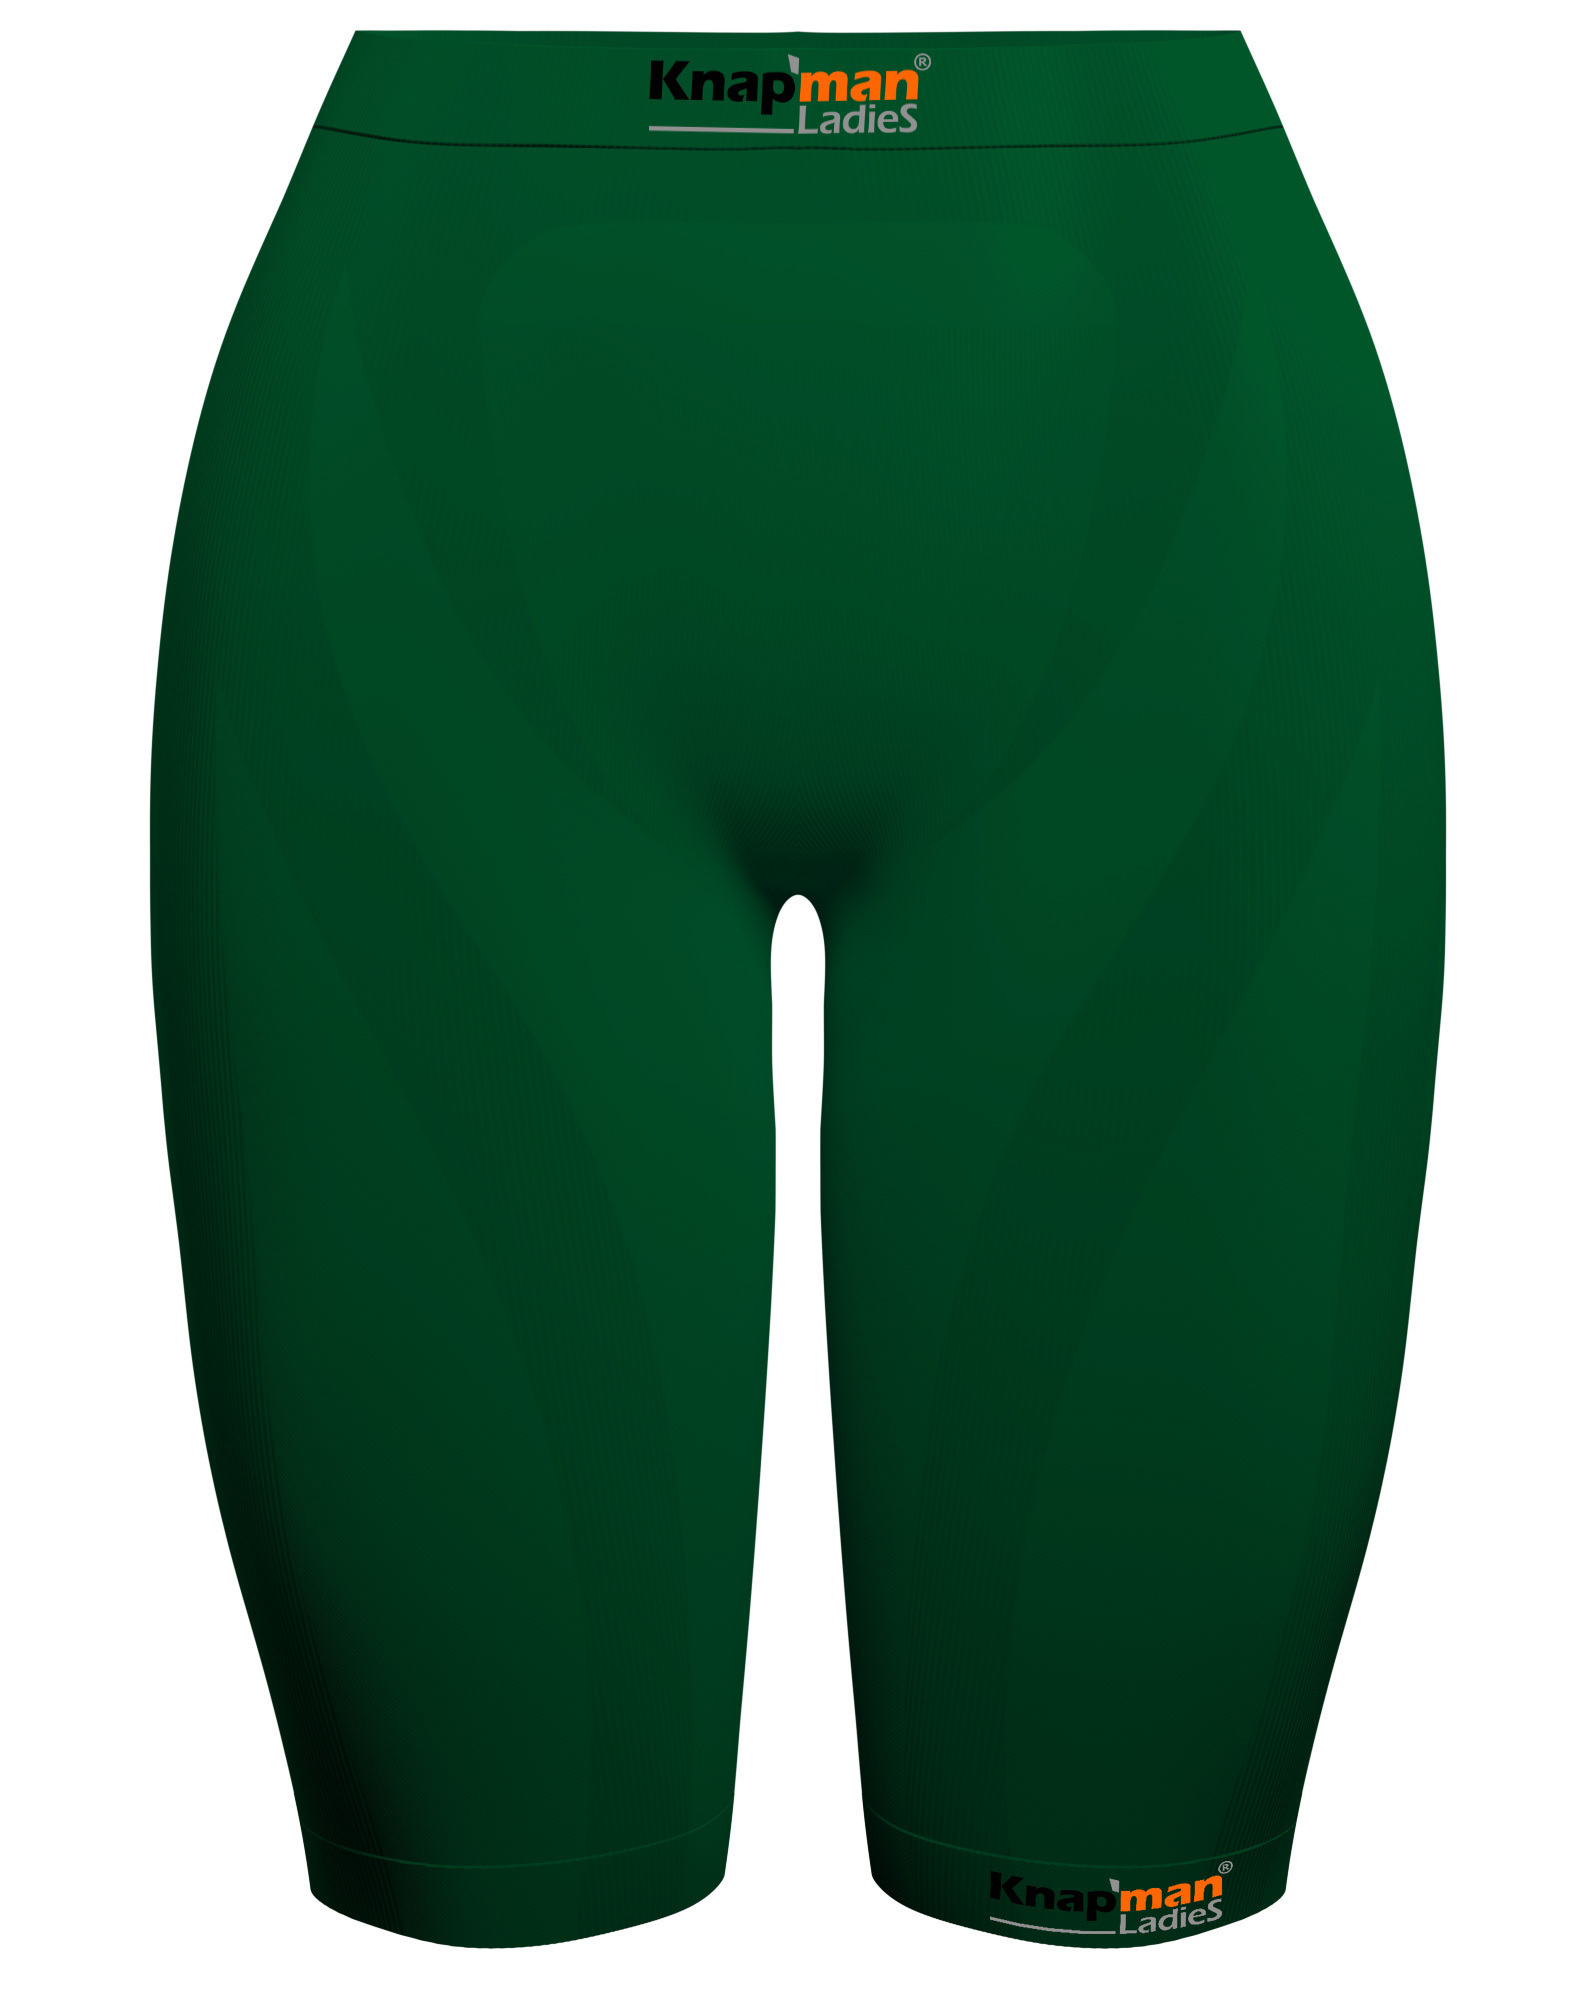 Knap'man Women's Compression Shorts Green - 45%